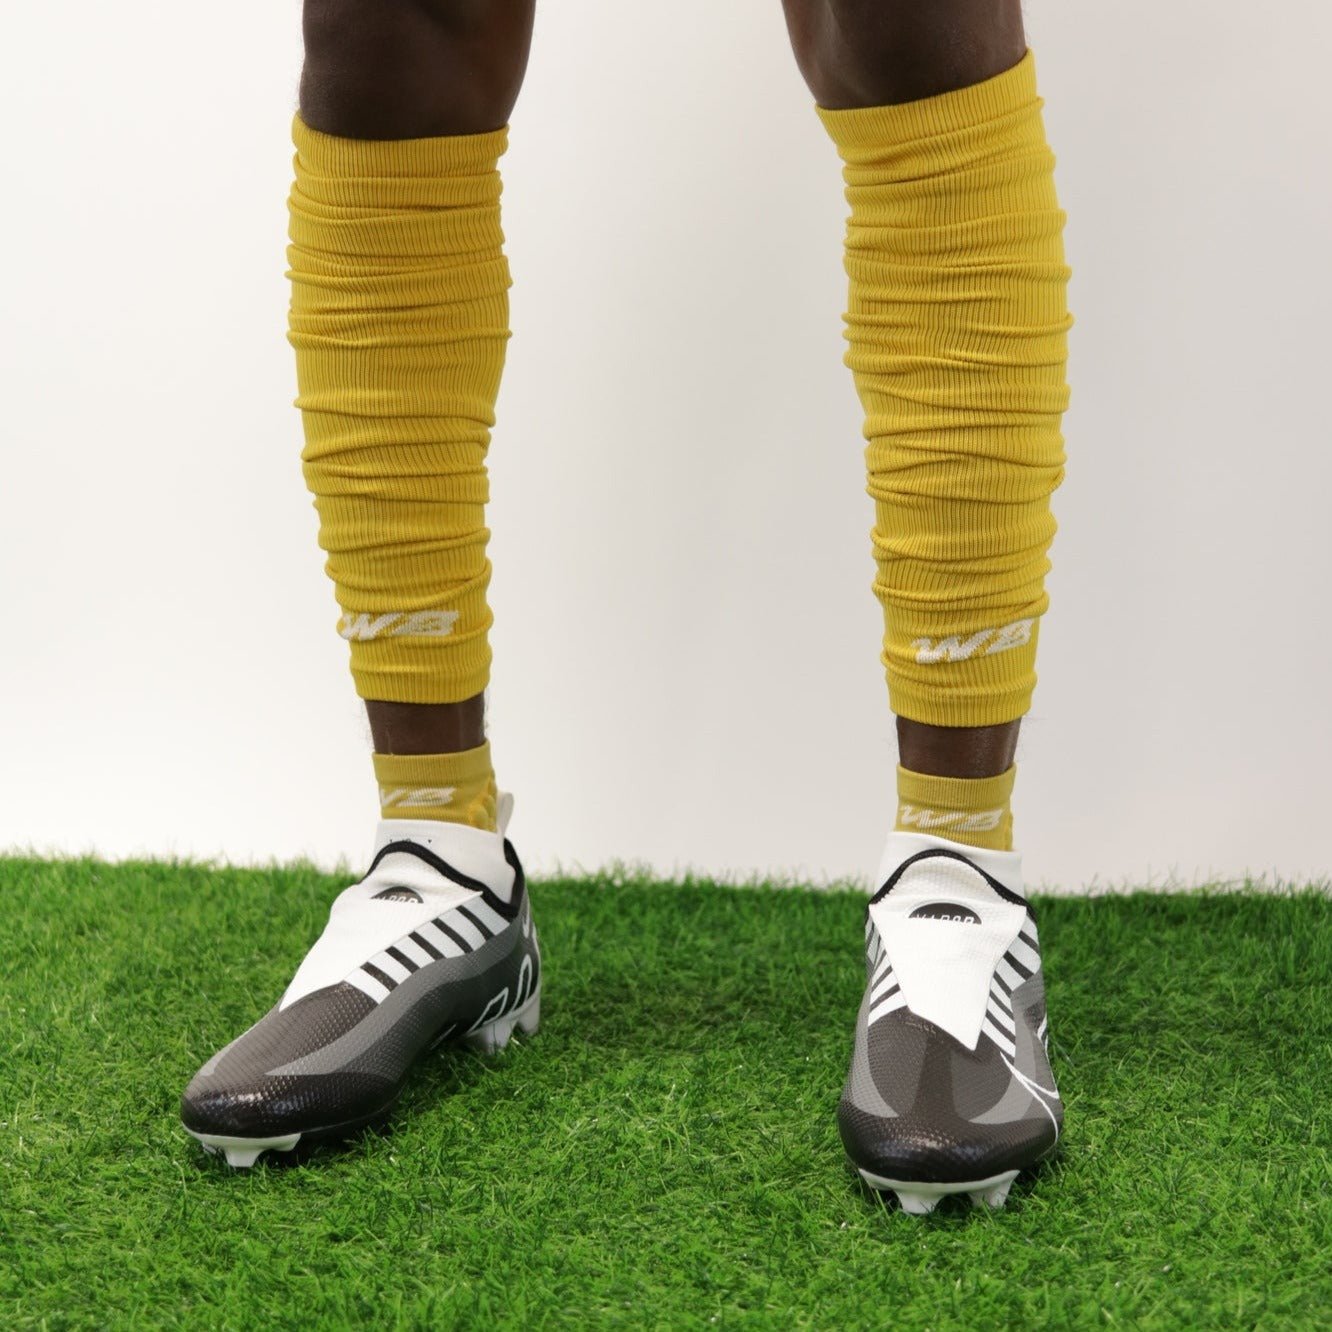 FOOTBALL LEG SLEEVES 2.0 (GOLD)